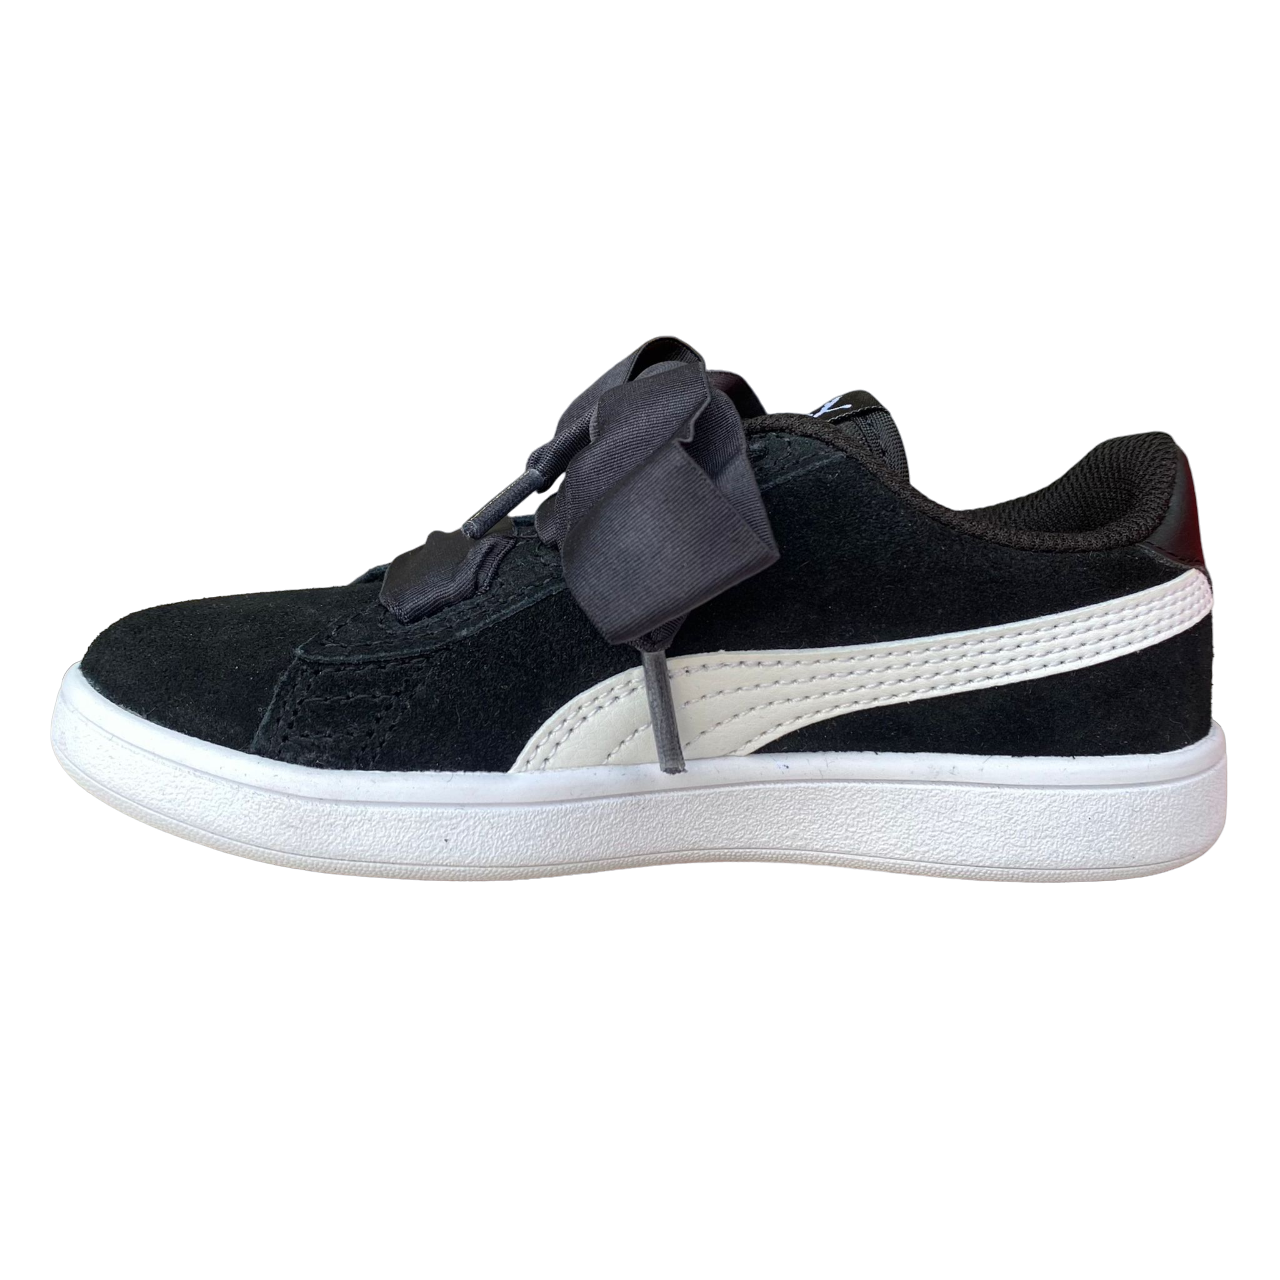 Puma girls&#39; sneakers Smash V2 Ribbon AC PS 366004 01 black-white